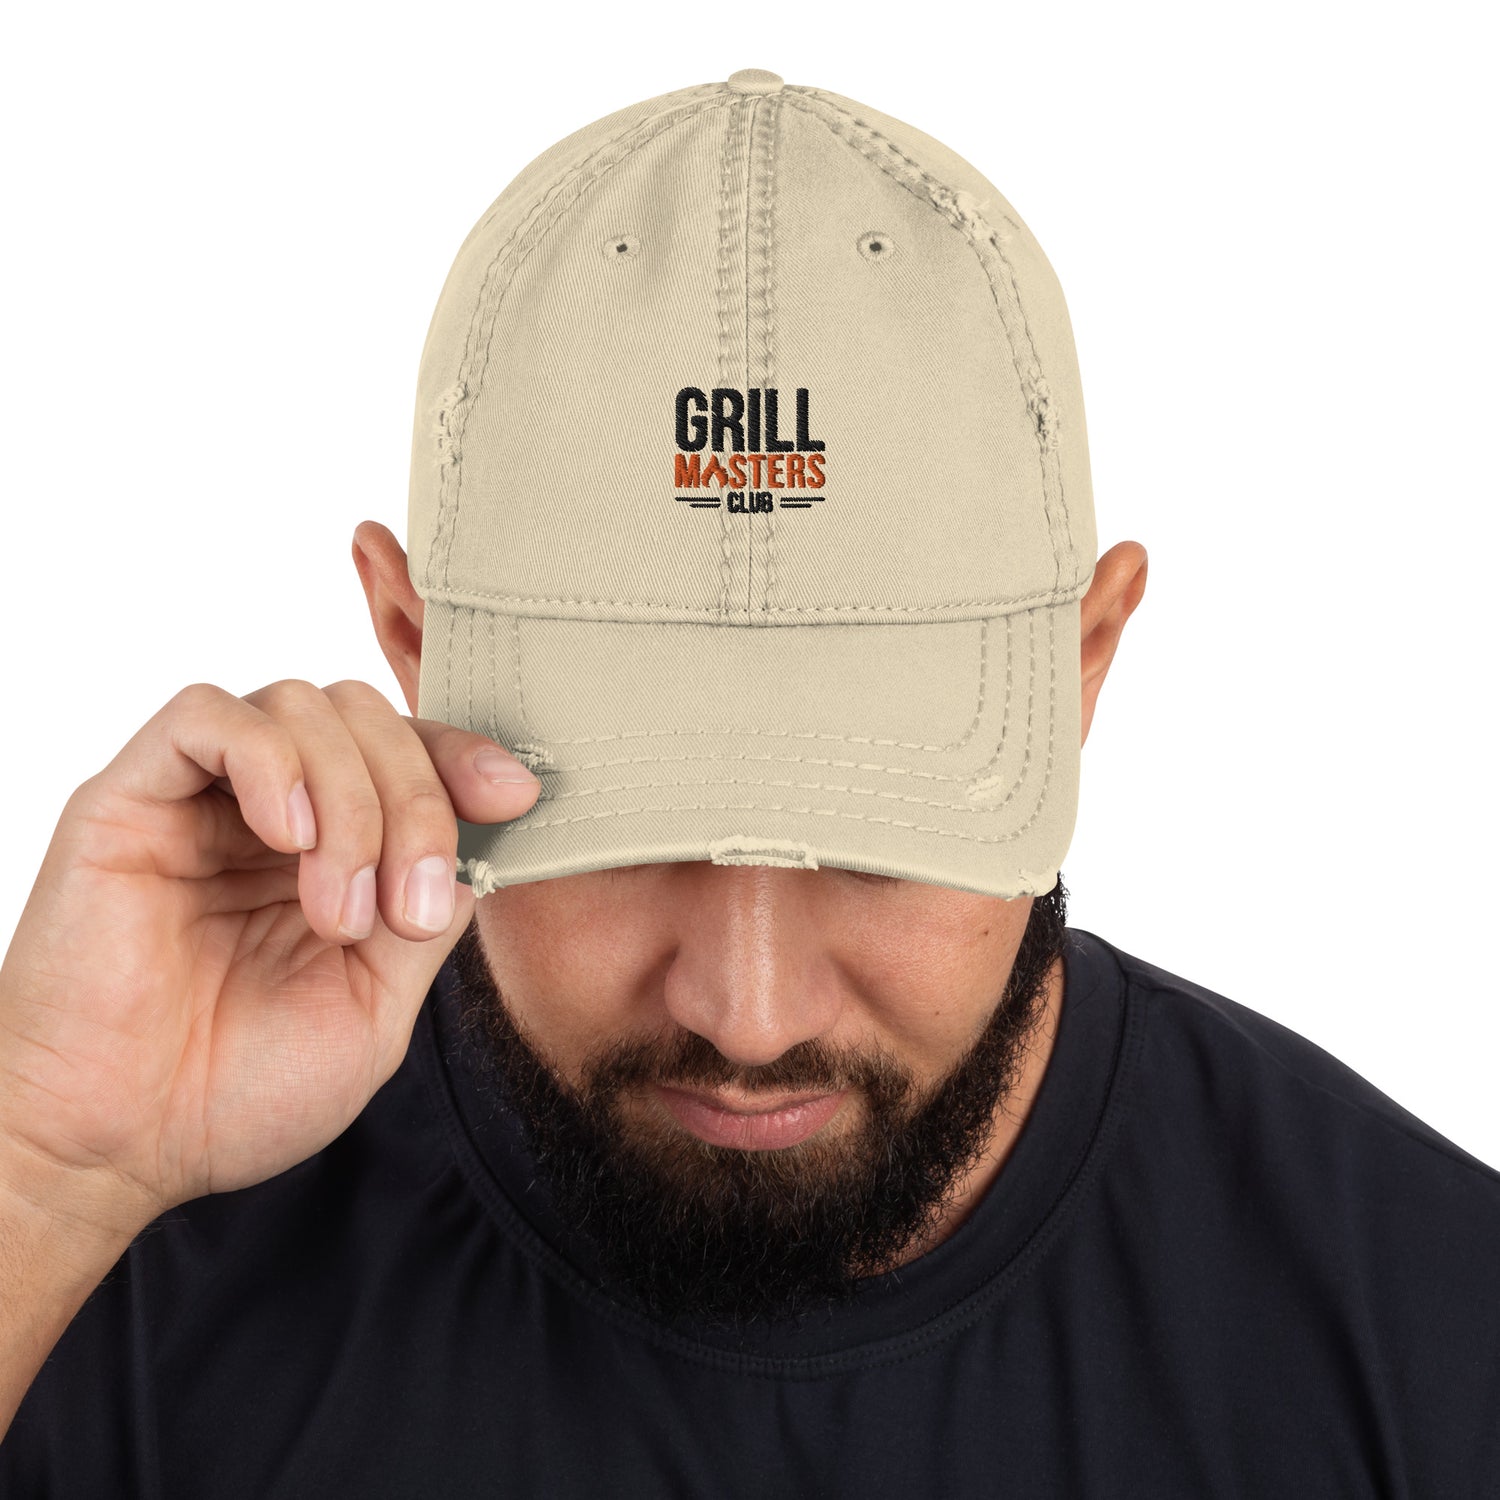 Grill Masters Club Distressed Dad Hat - Black Logo (Free US Shipping)